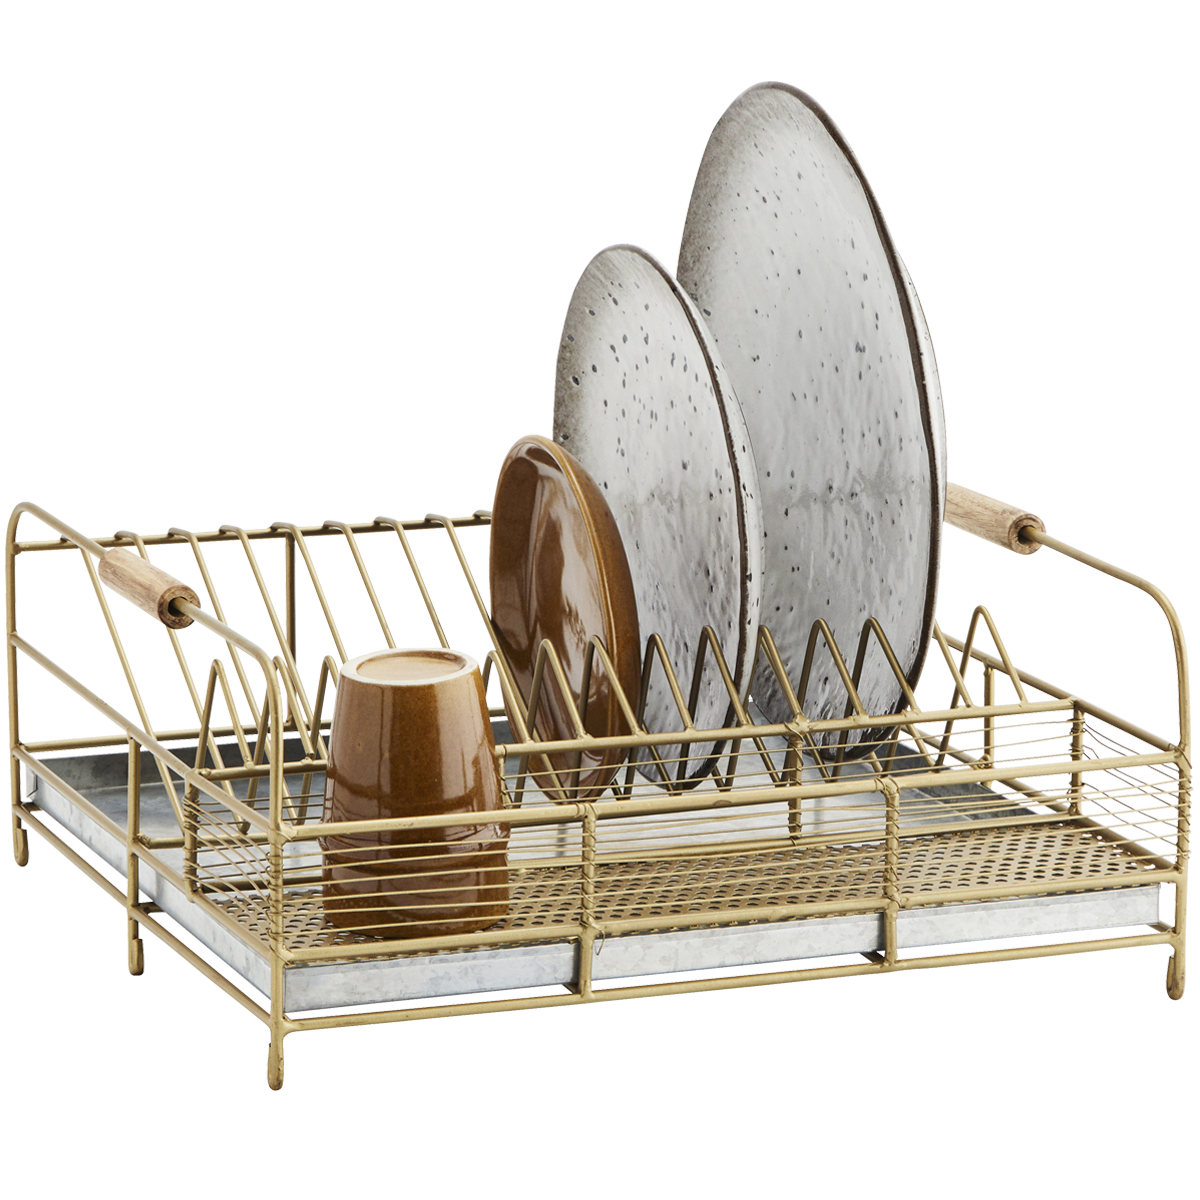 Iron dish rack